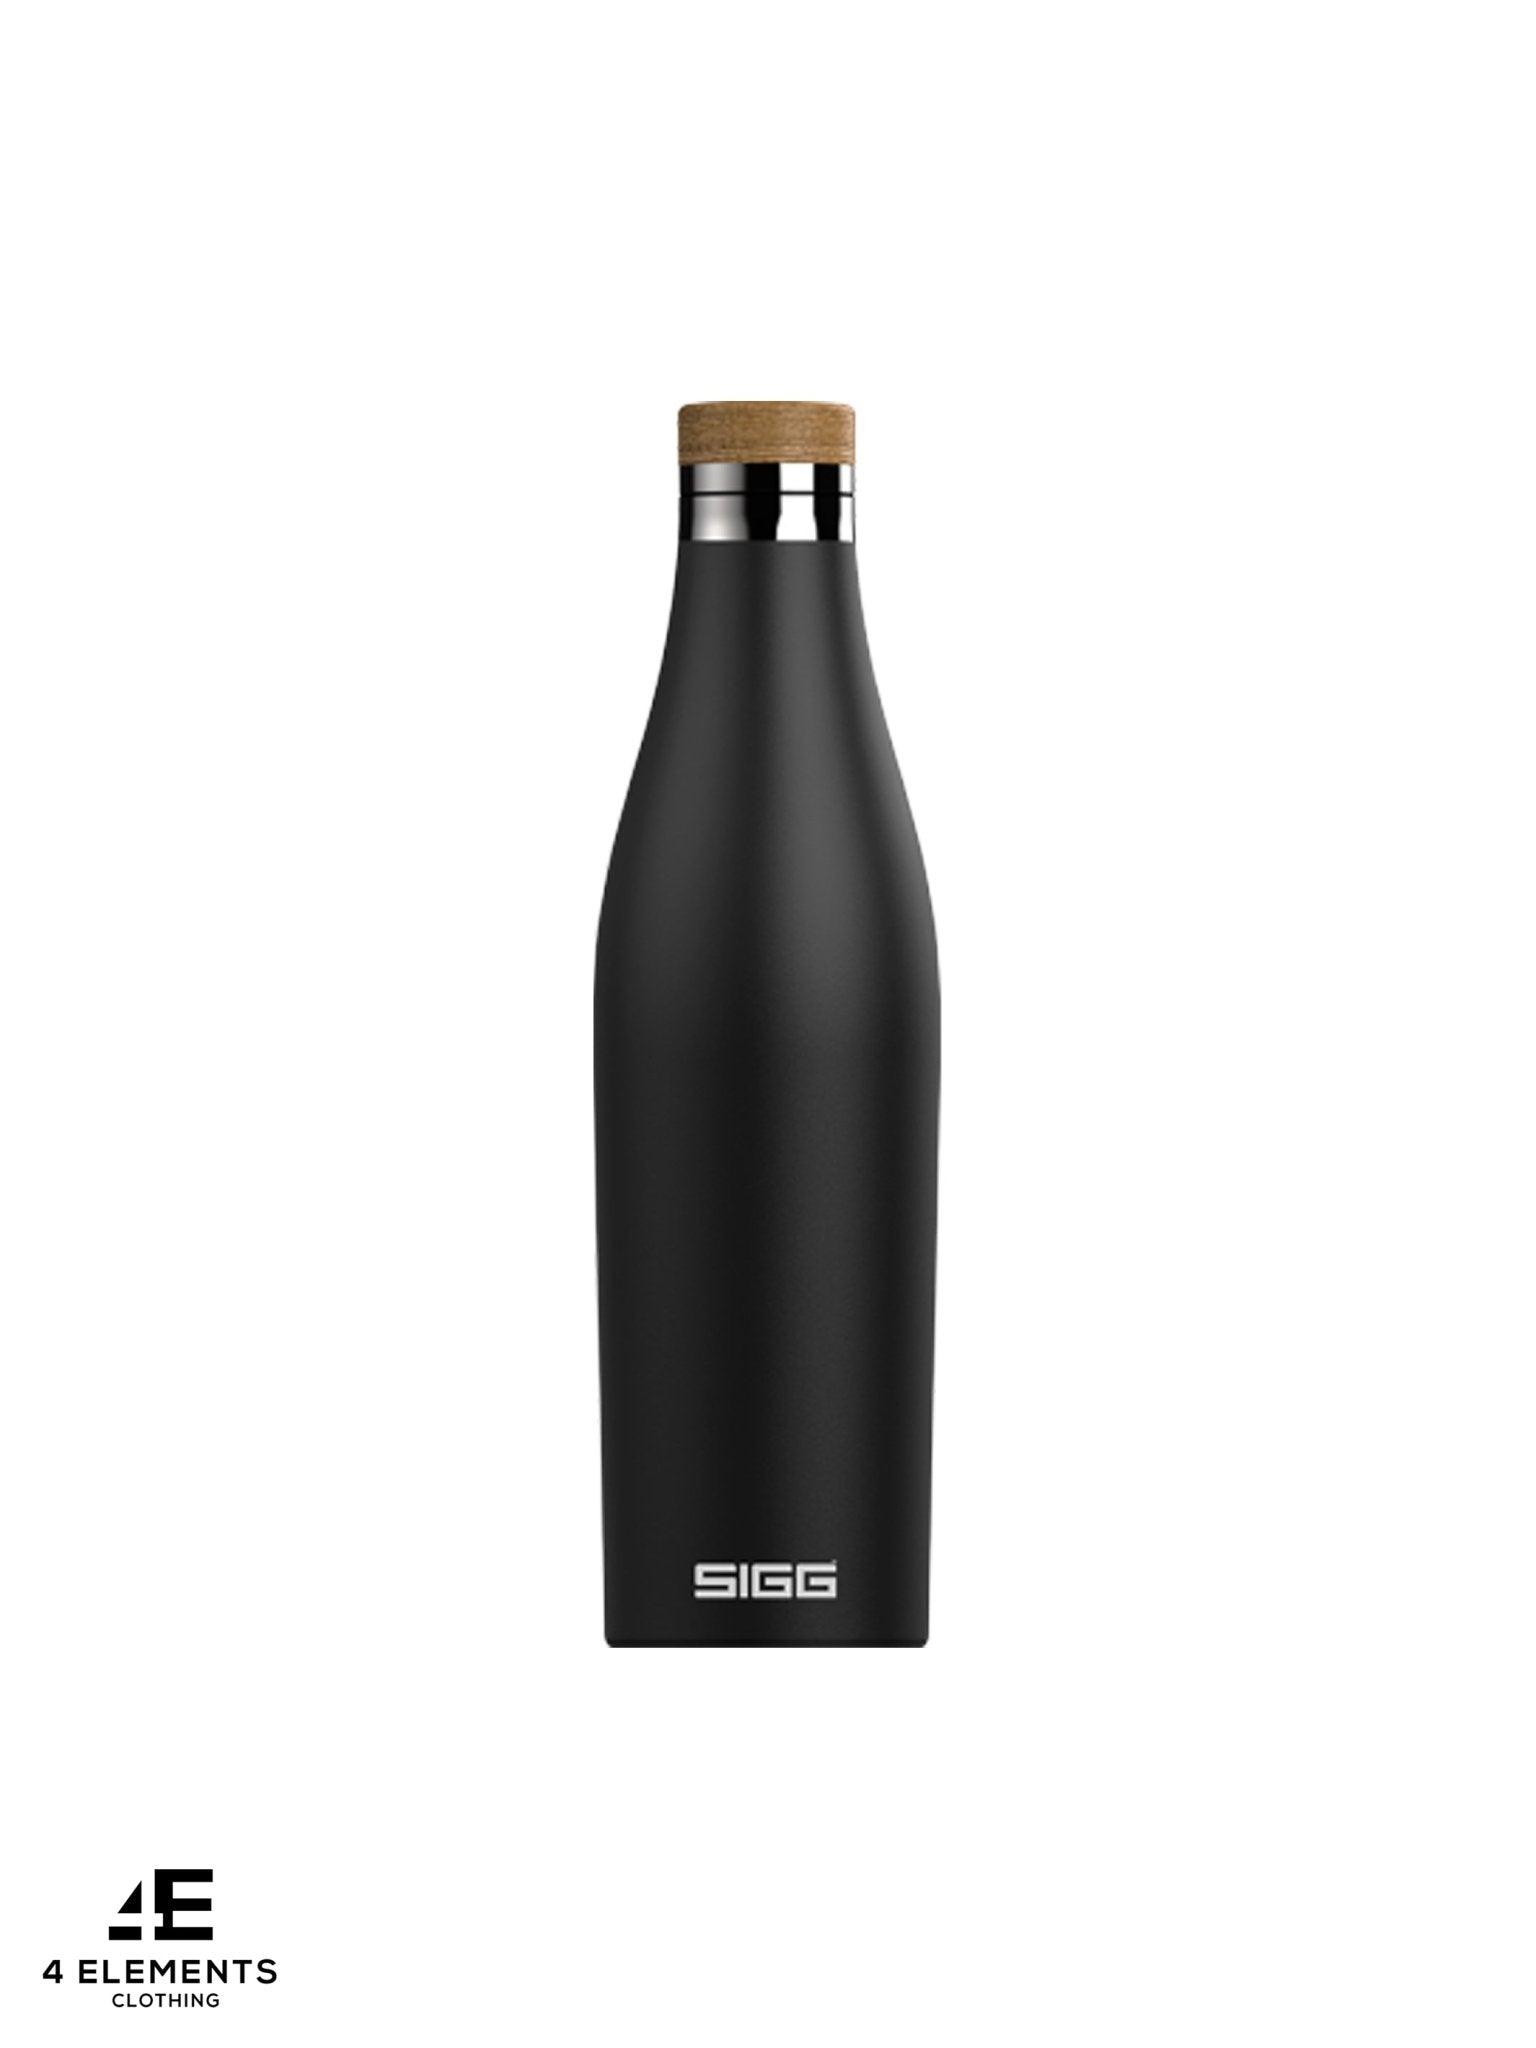 4elementsclothingSiggSIGG - Thermo Flask Meridian Plain Black 0.5 LWater Bottles8999.2